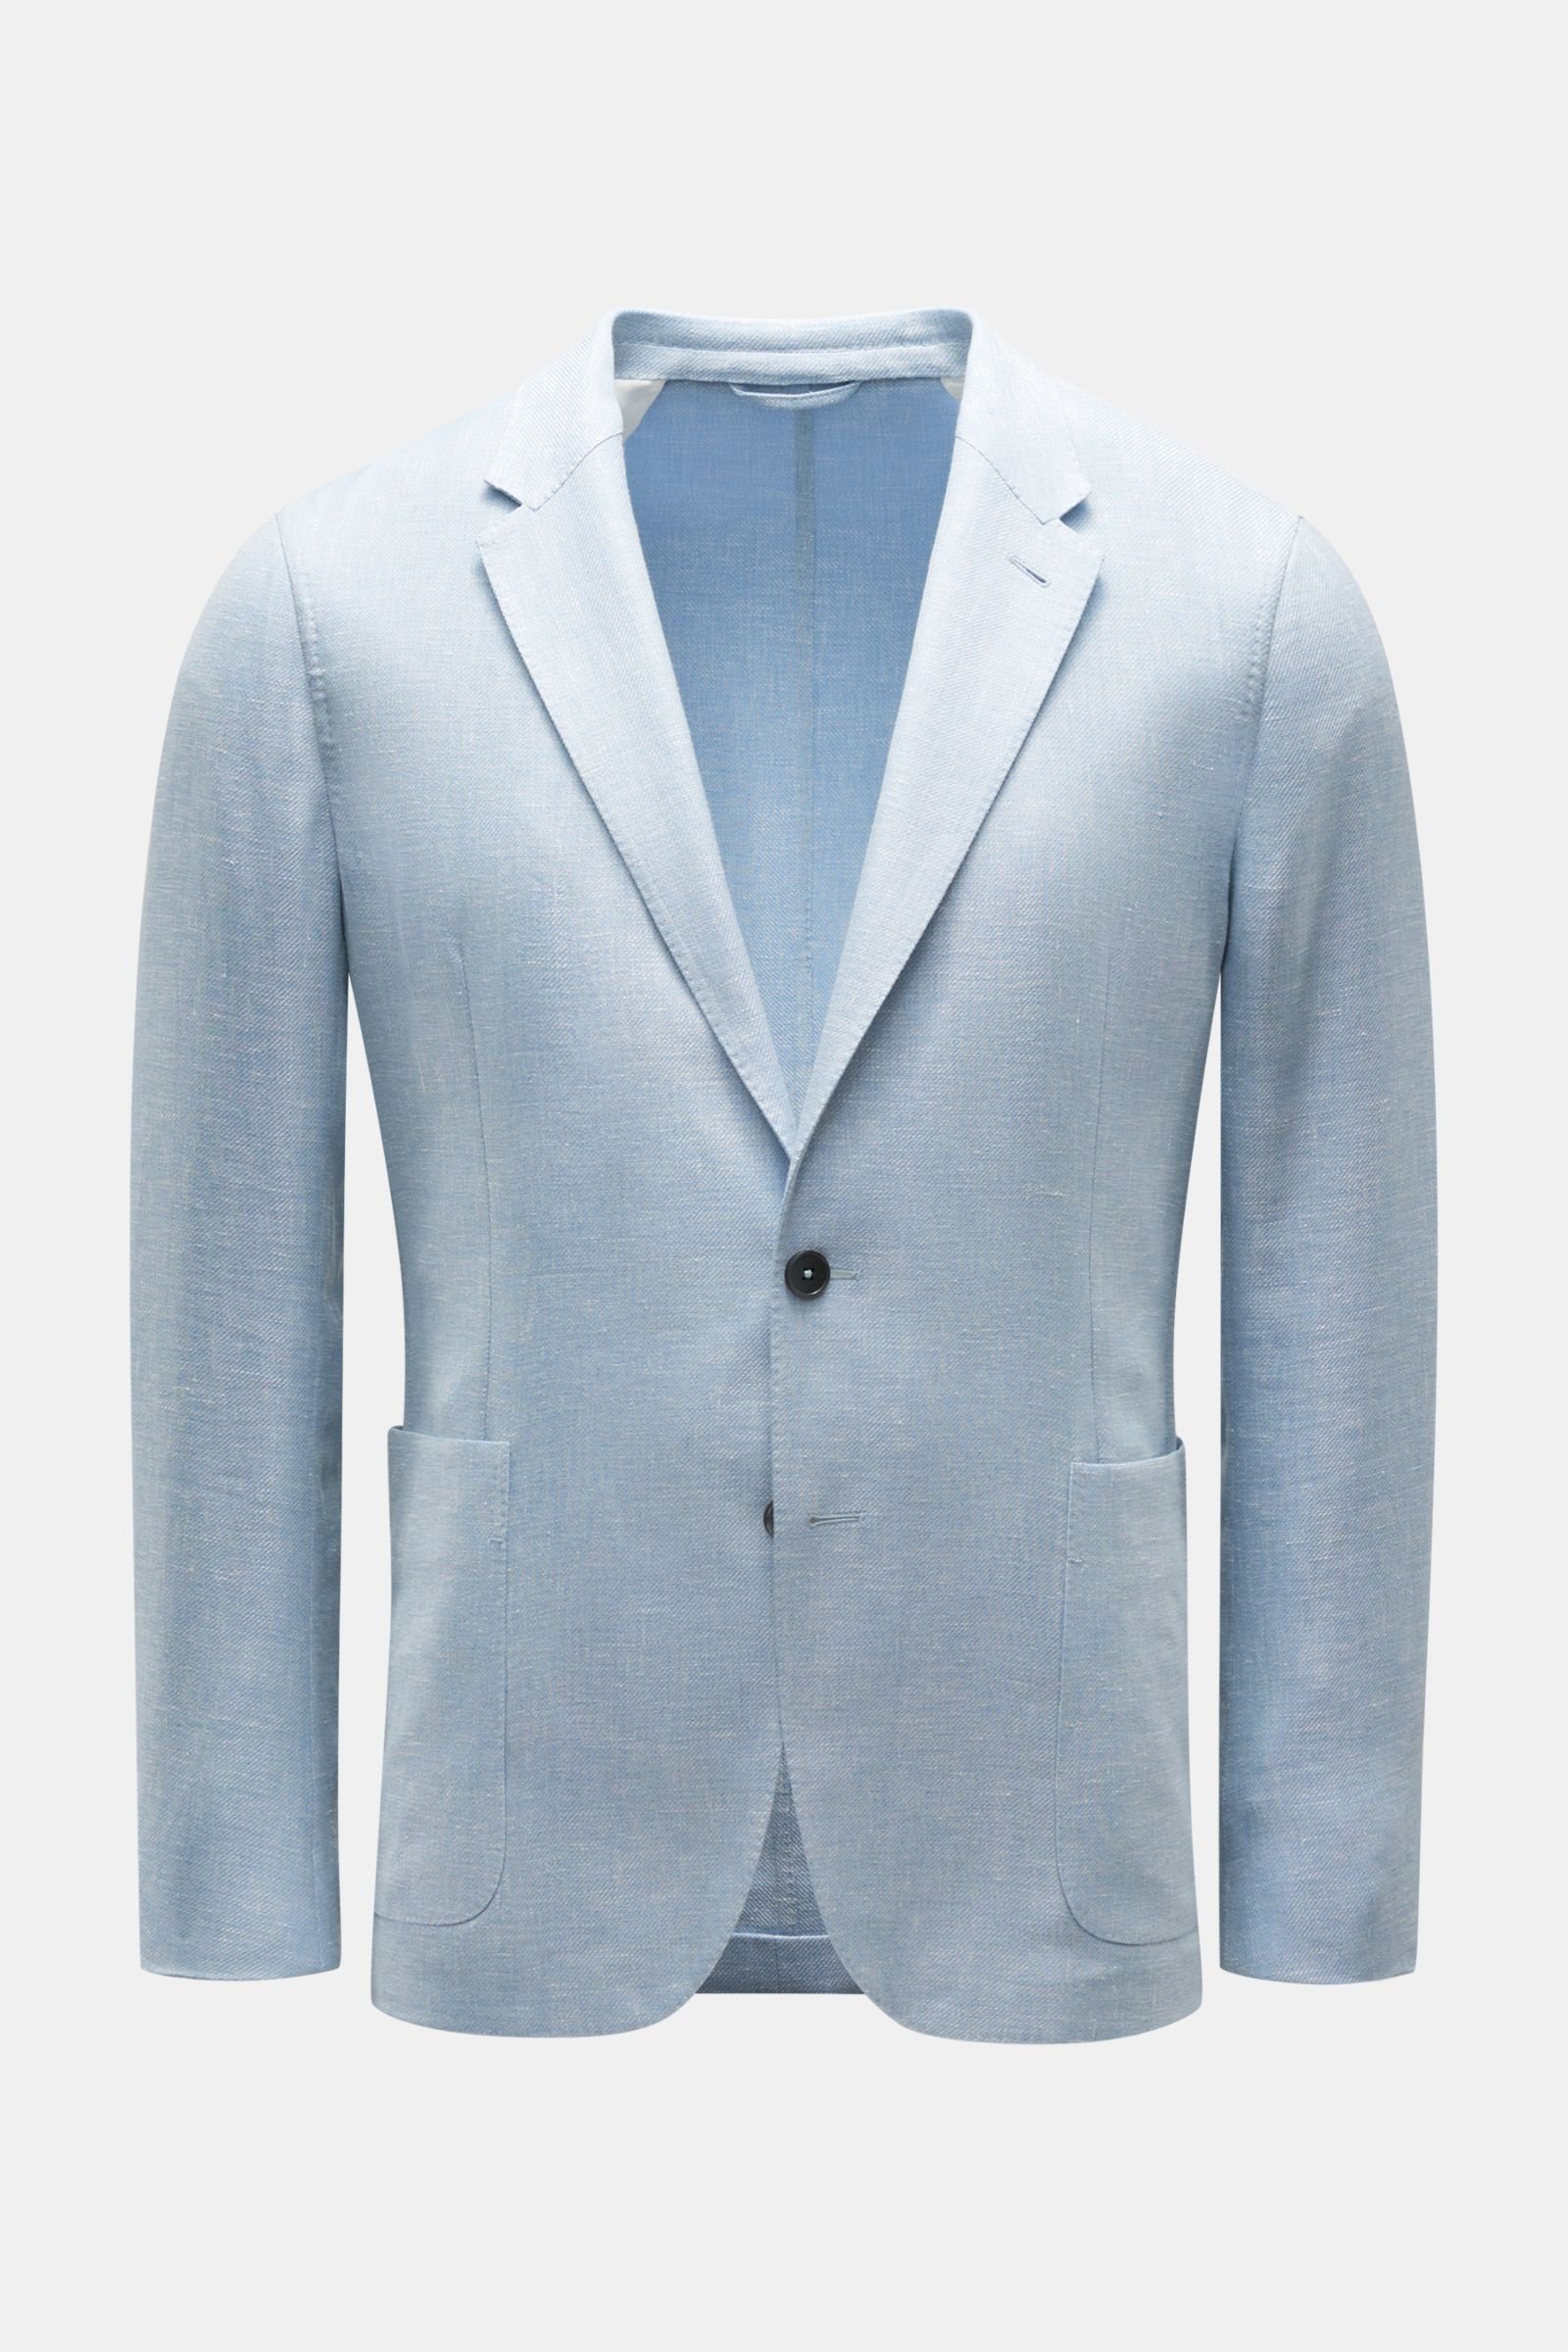 Smart-casual jacket 'Crossover' light blue